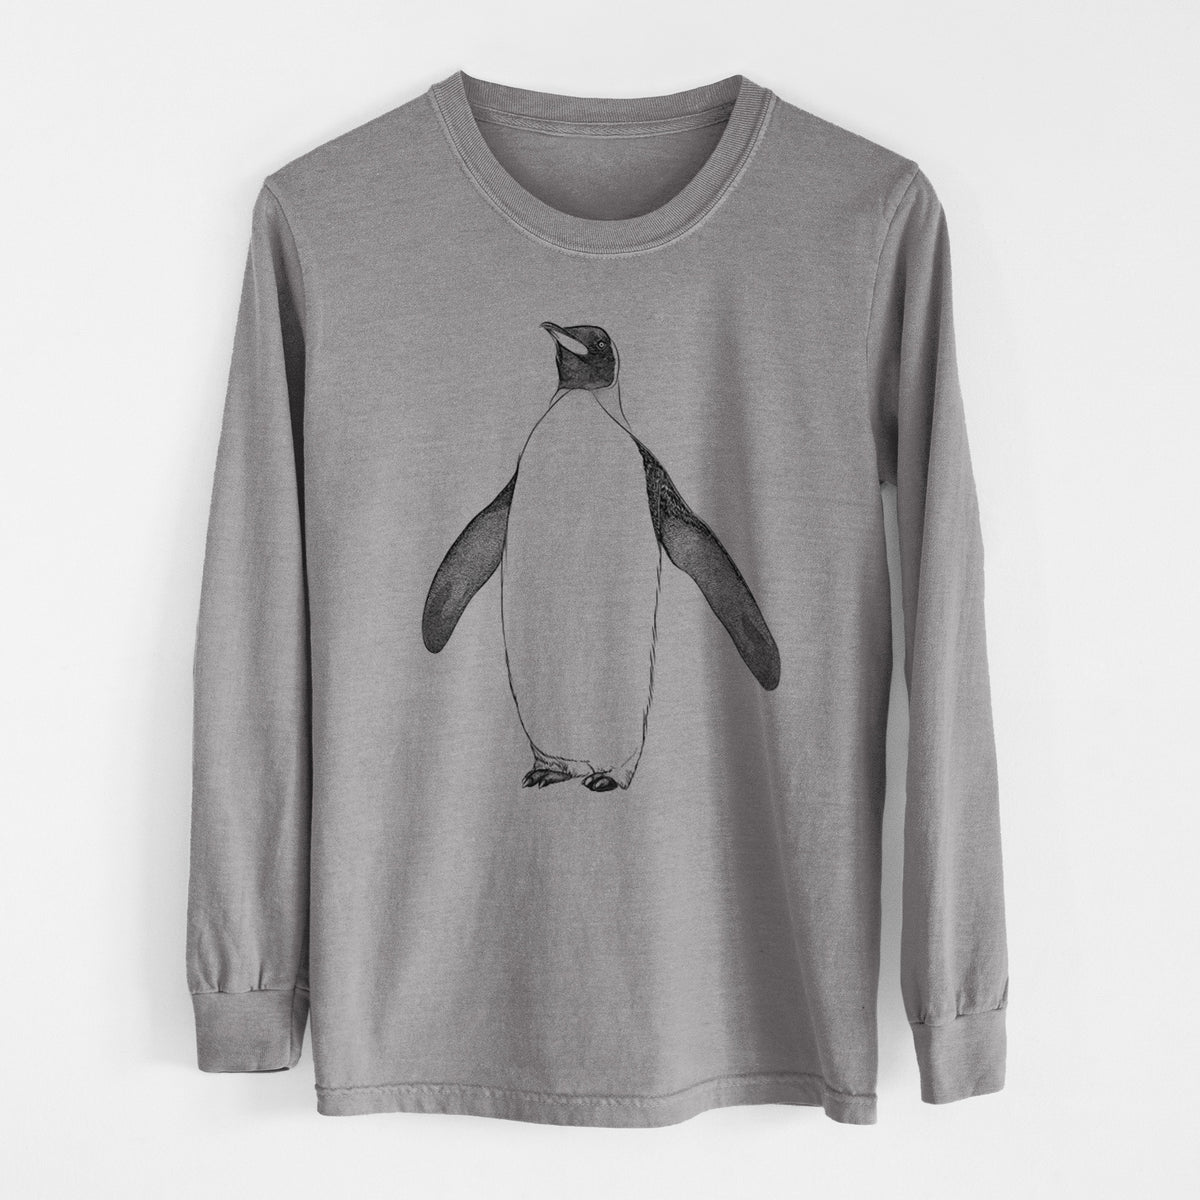 Emperor Penguin - Aptenodytes forsteri - Heavyweight 100% Cotton Long Sleeve